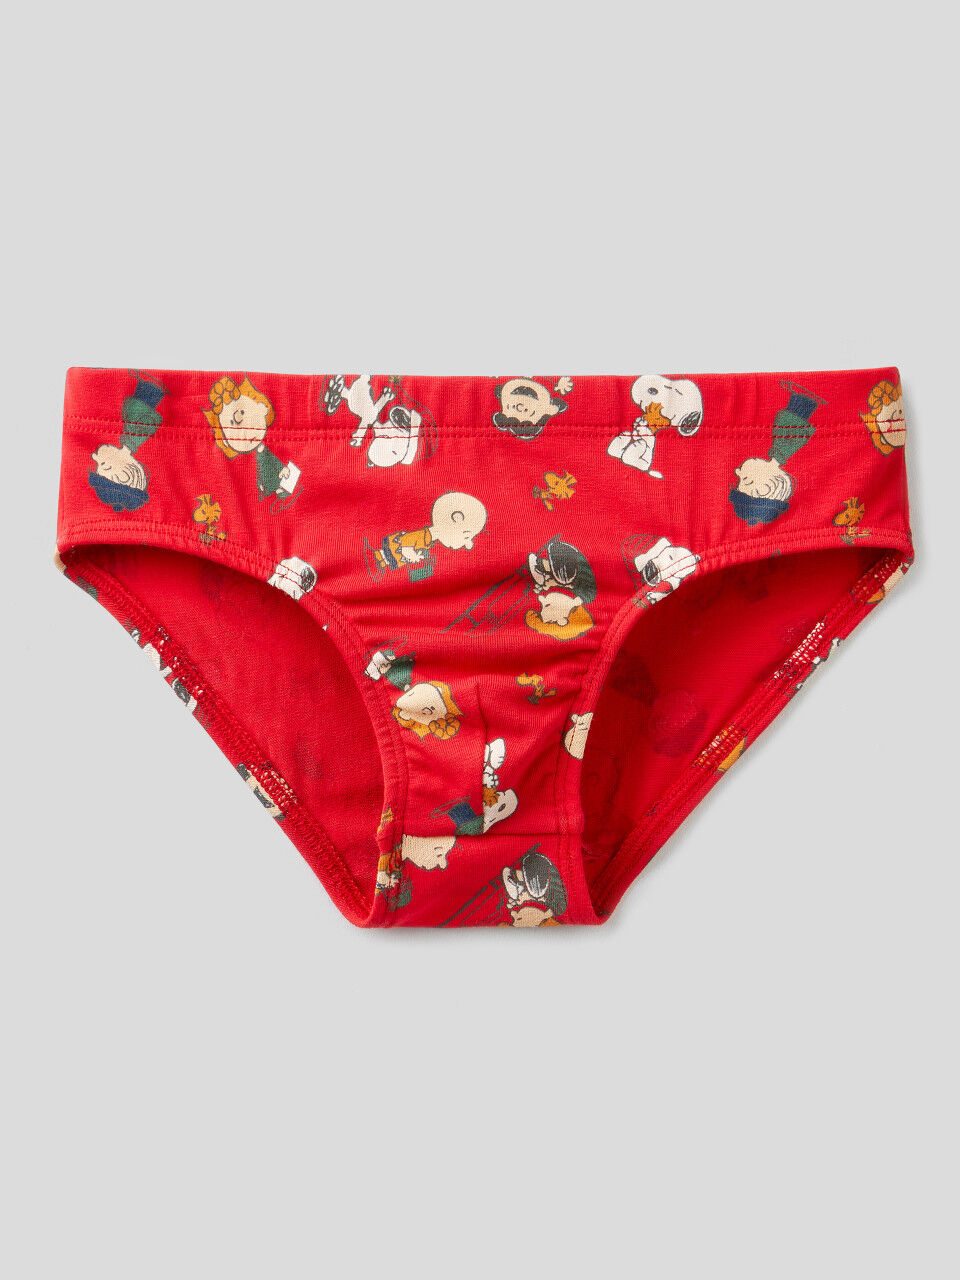 Peanuts Christmas underwear